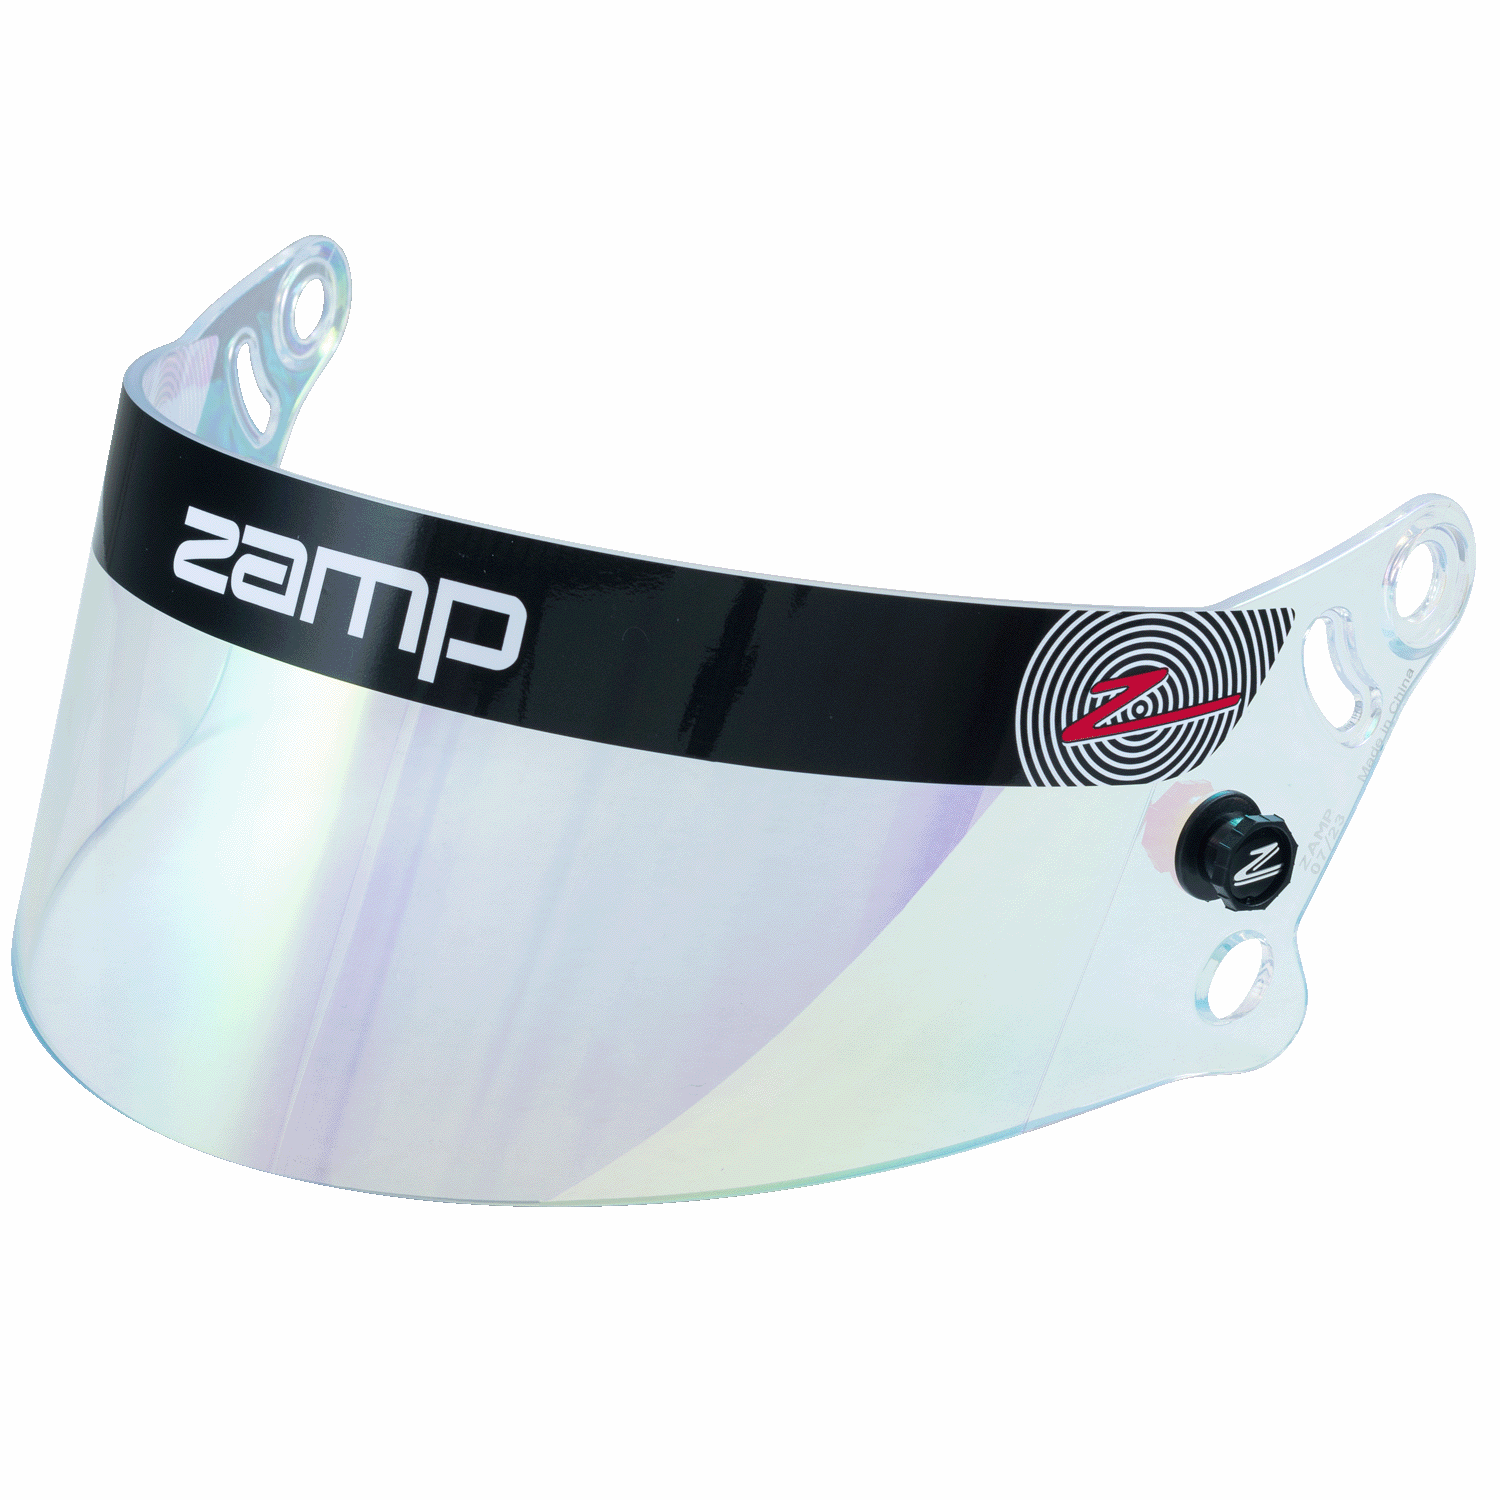 Zamp Z-20 Photochromatic Prism Shield, 3 options